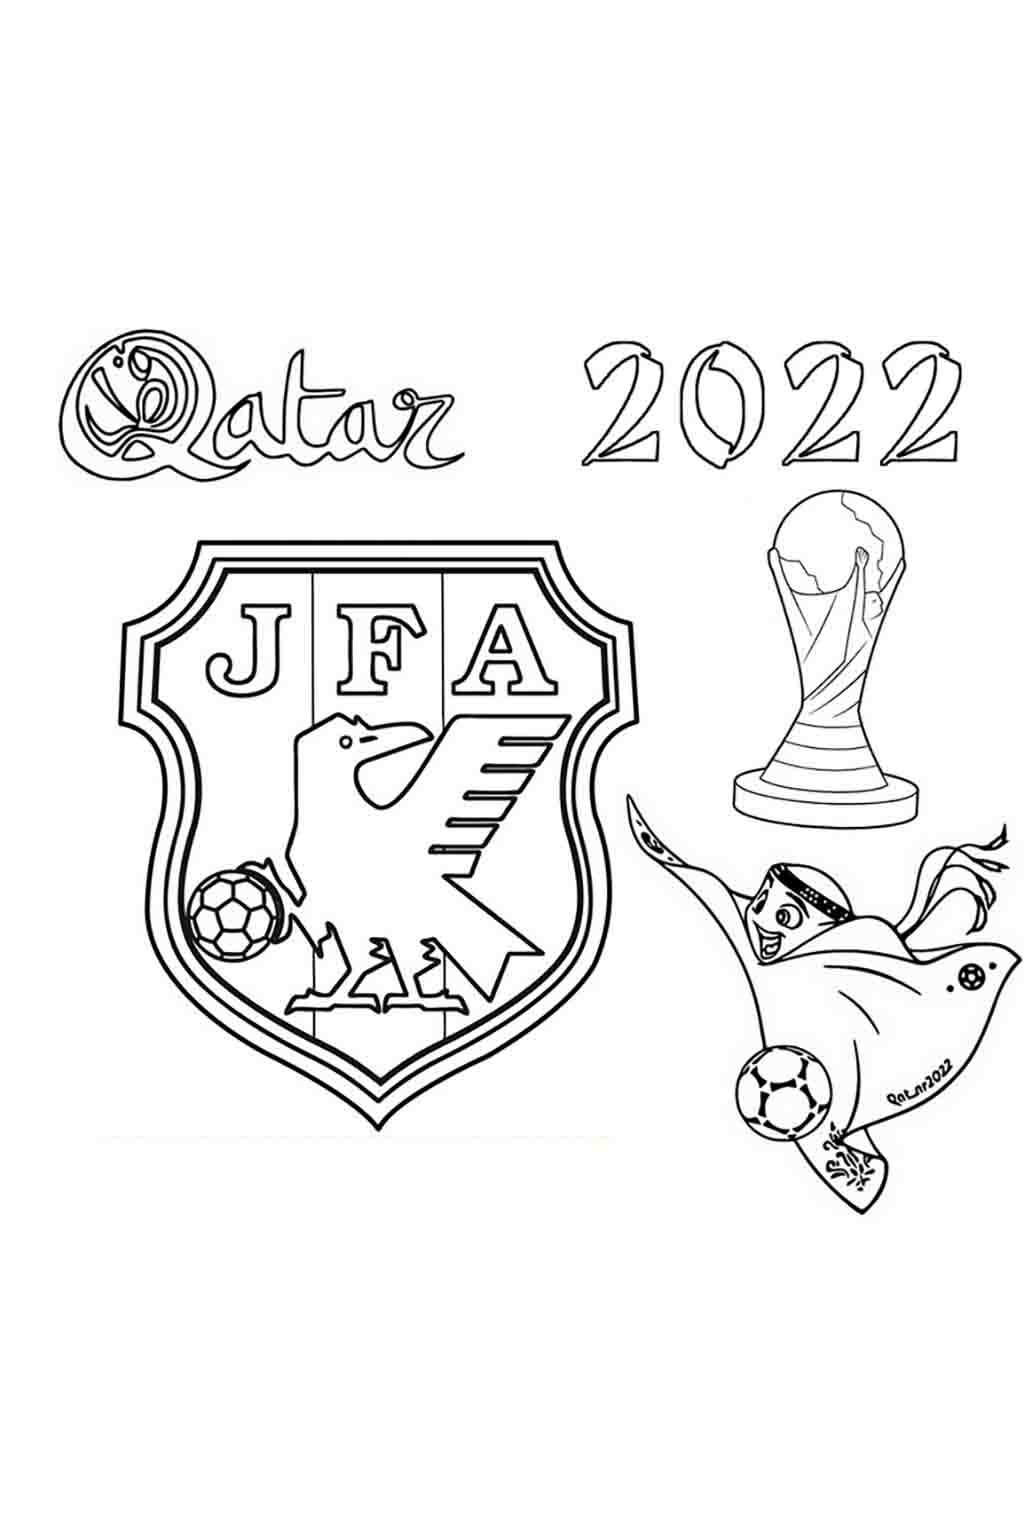 Japan team FIFA World Cup 2022